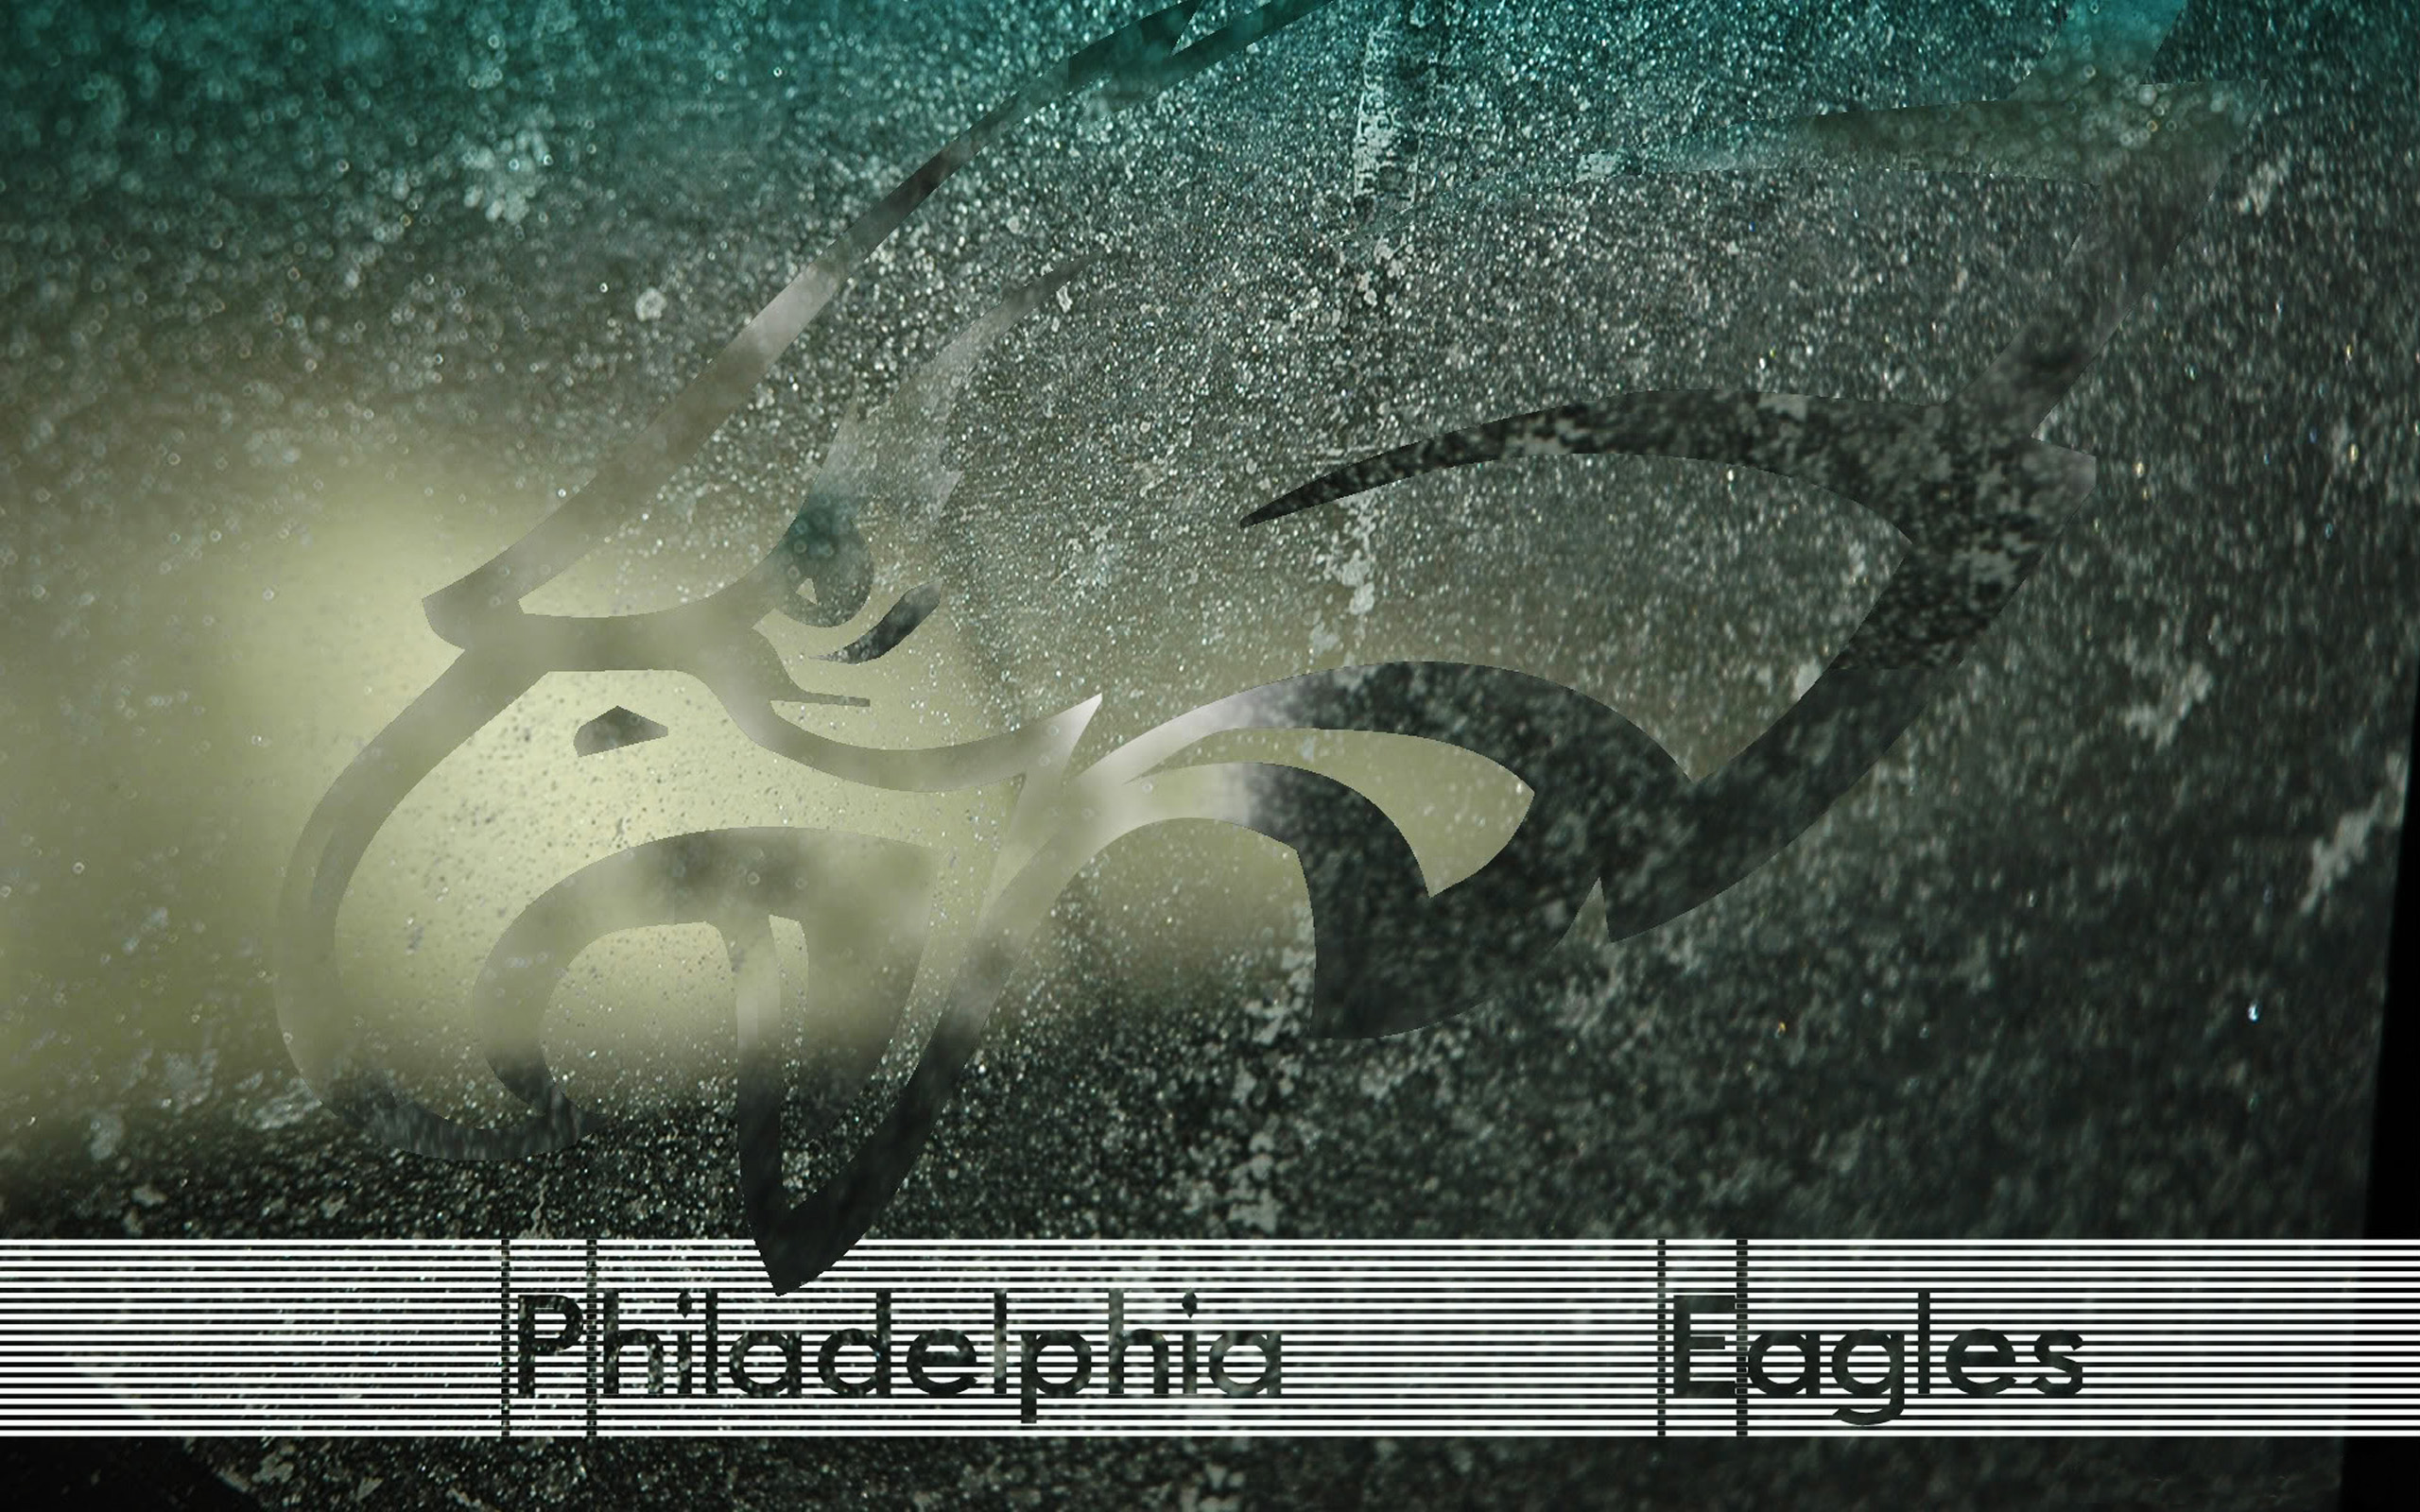 philadelphia eagles cover